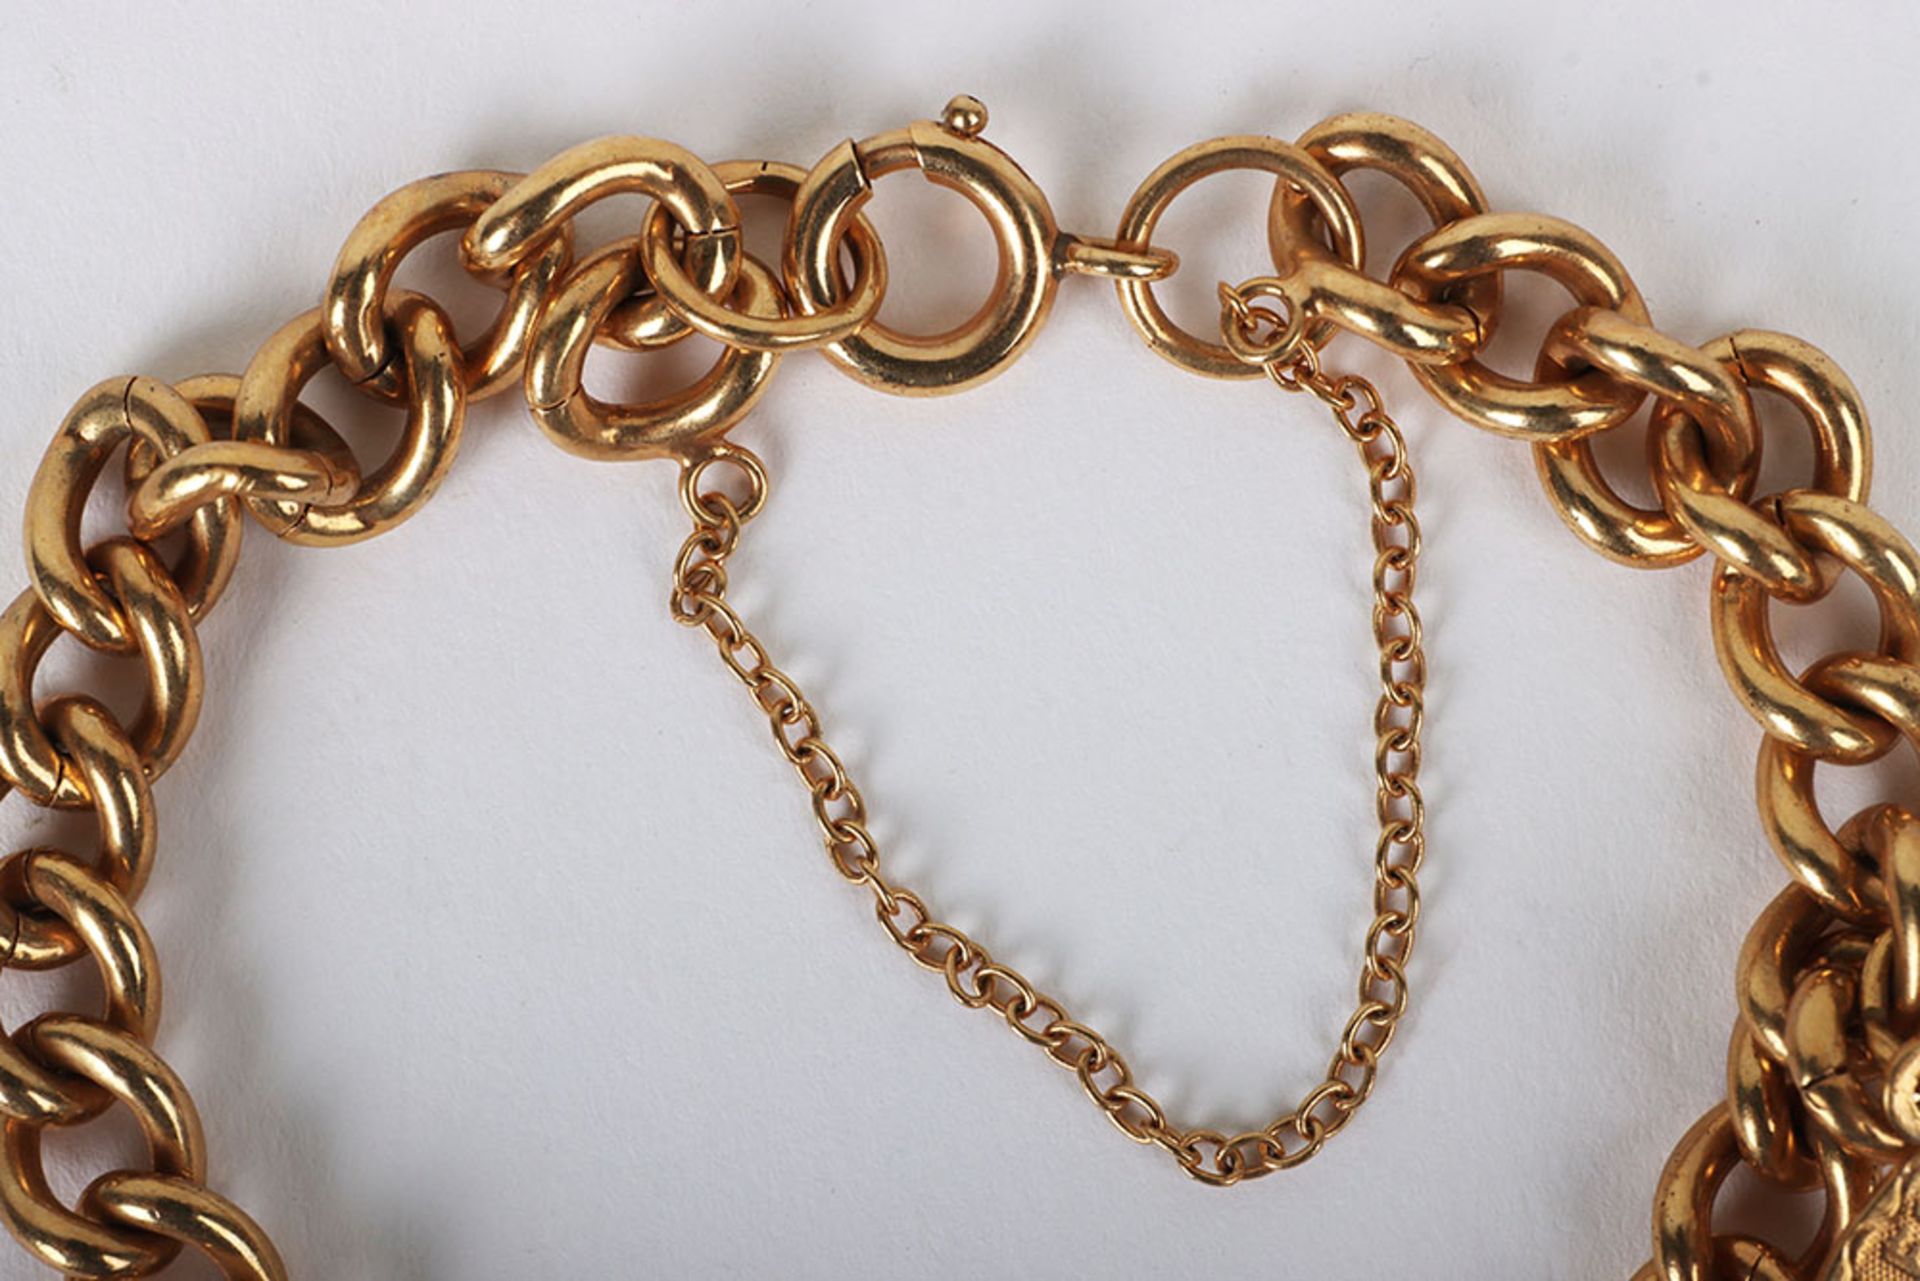 A 9t gold charm bracelet - Image 5 of 6